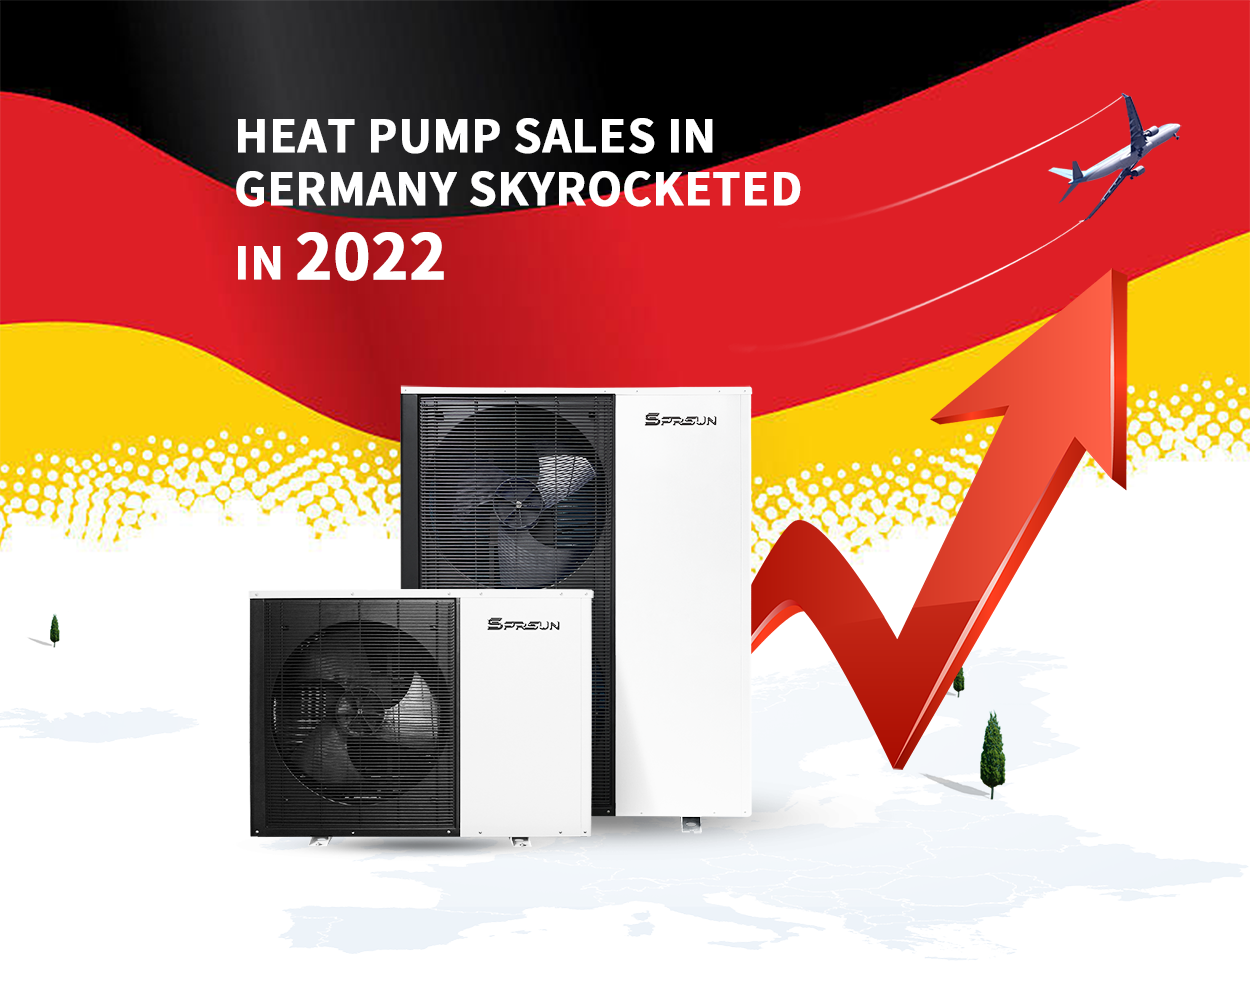 Why Heat Pump Sales in Germany Skyrocketed in 2022